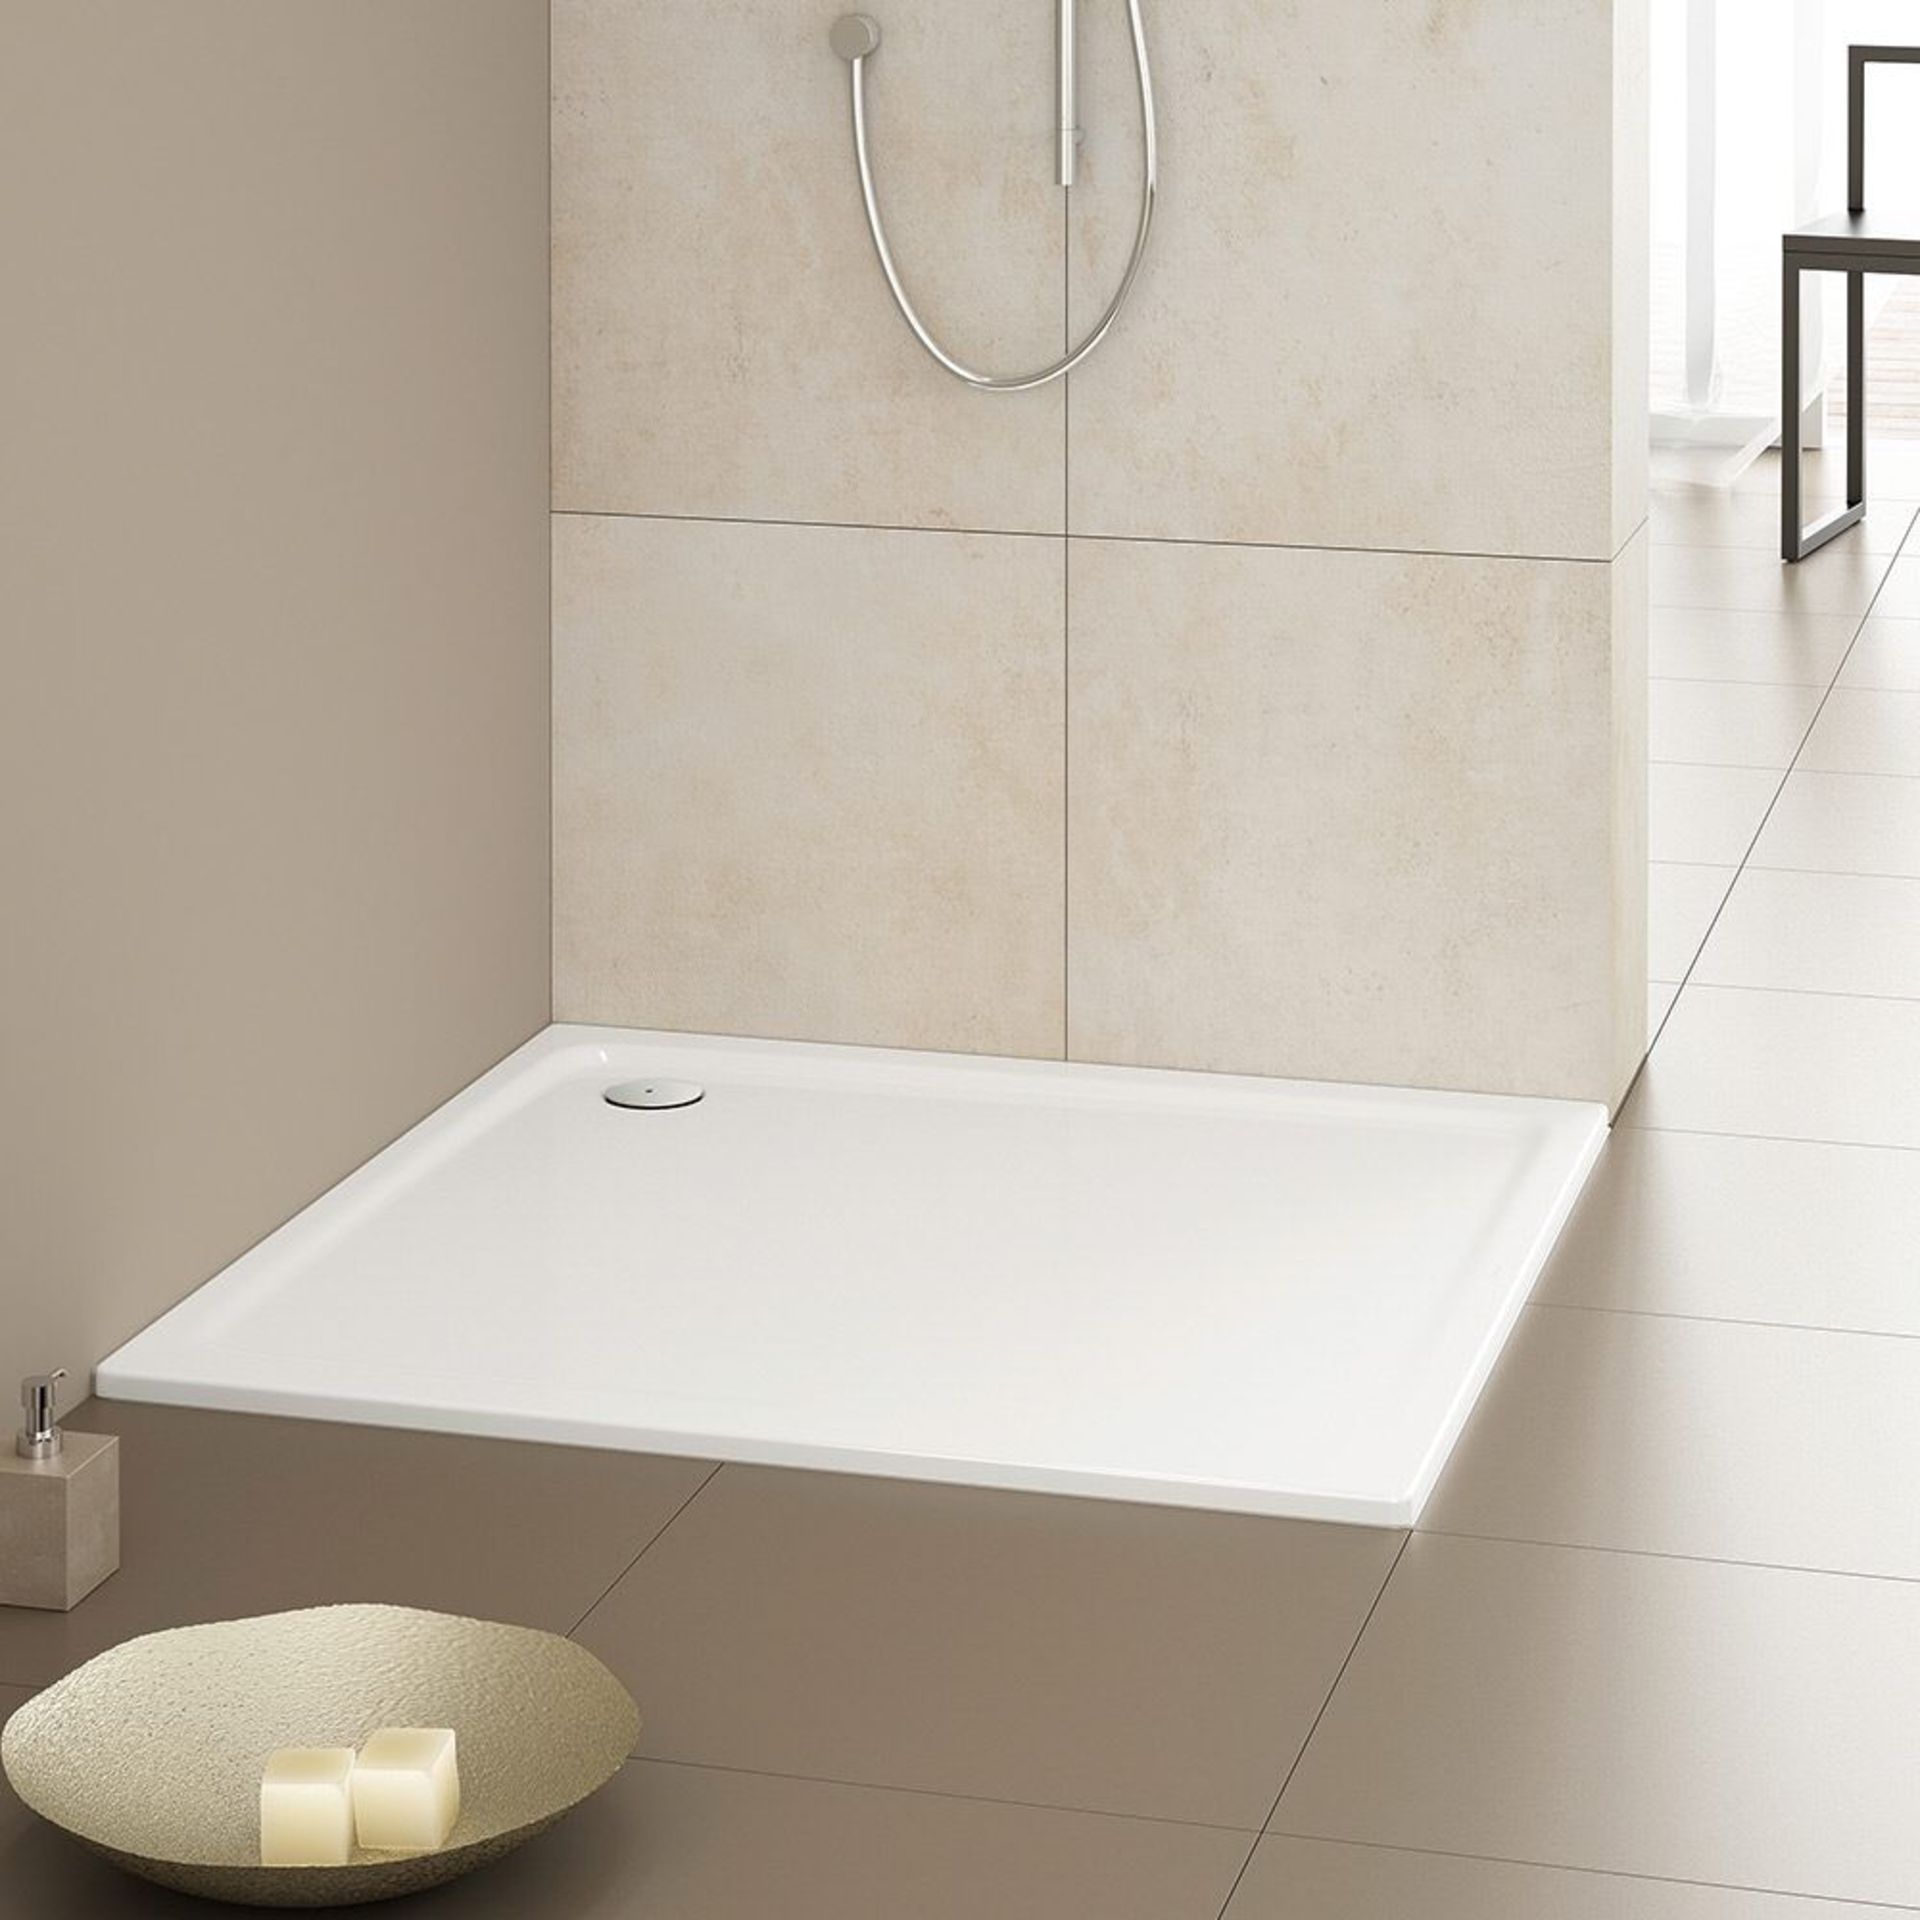 Kaldewei ST SUPERPLAN shower tray, 900x1200x25, anti-slip, alpine white, easy-clean finish. RRP £390 - Image 3 of 3